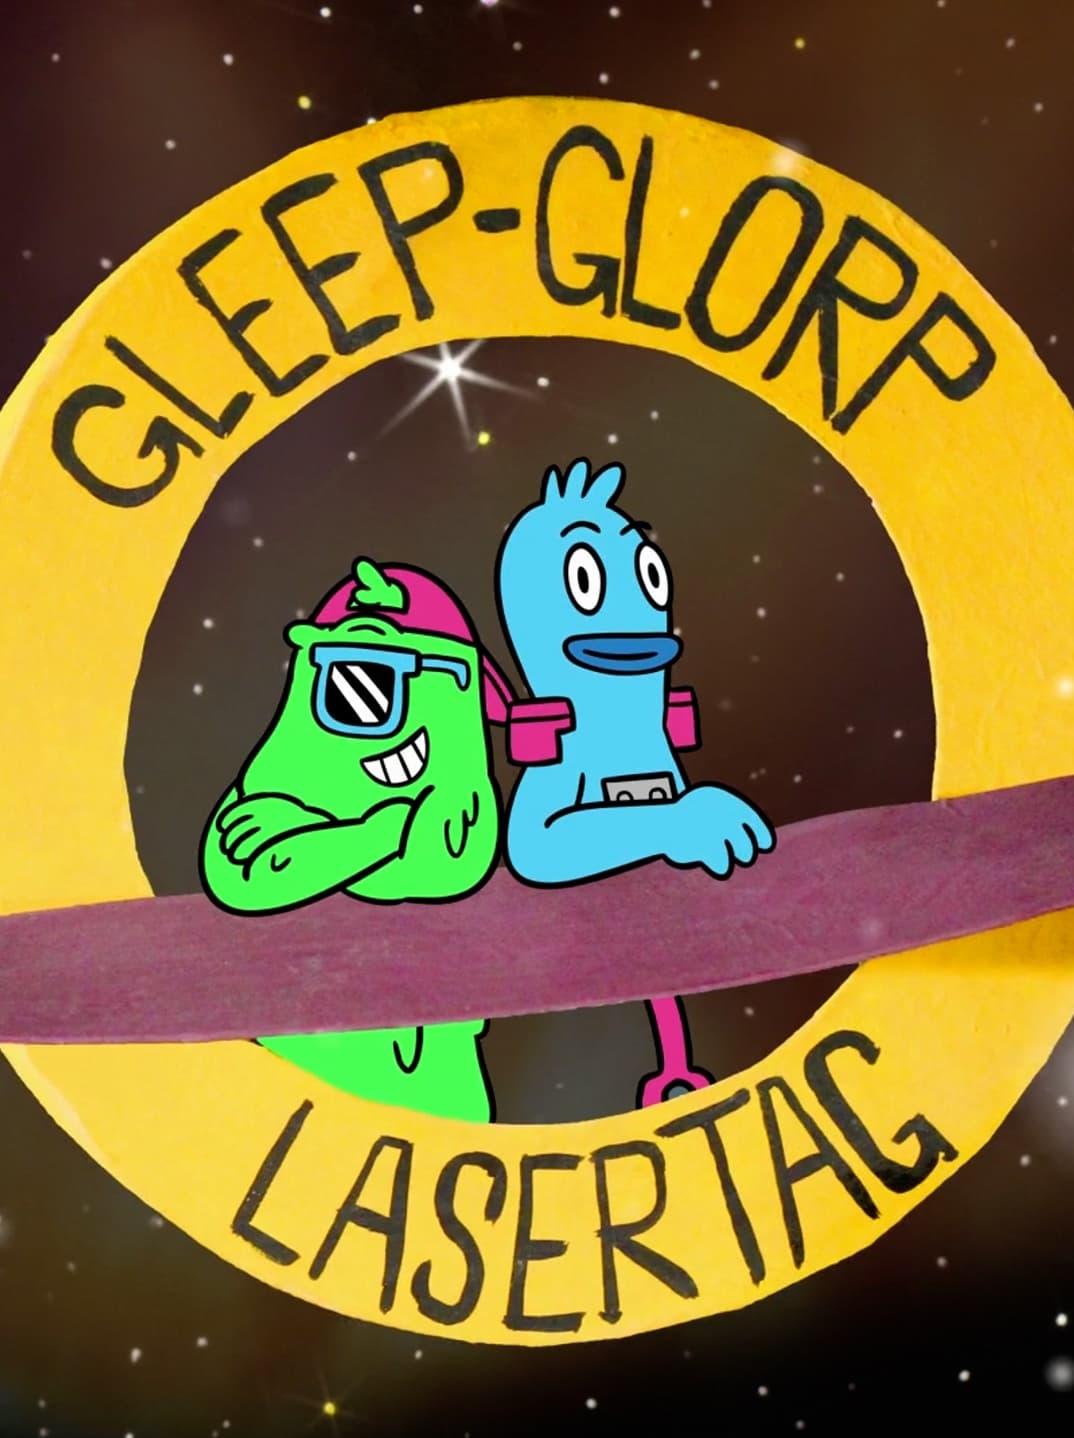 Gleep-Glorp & Lasertag poster